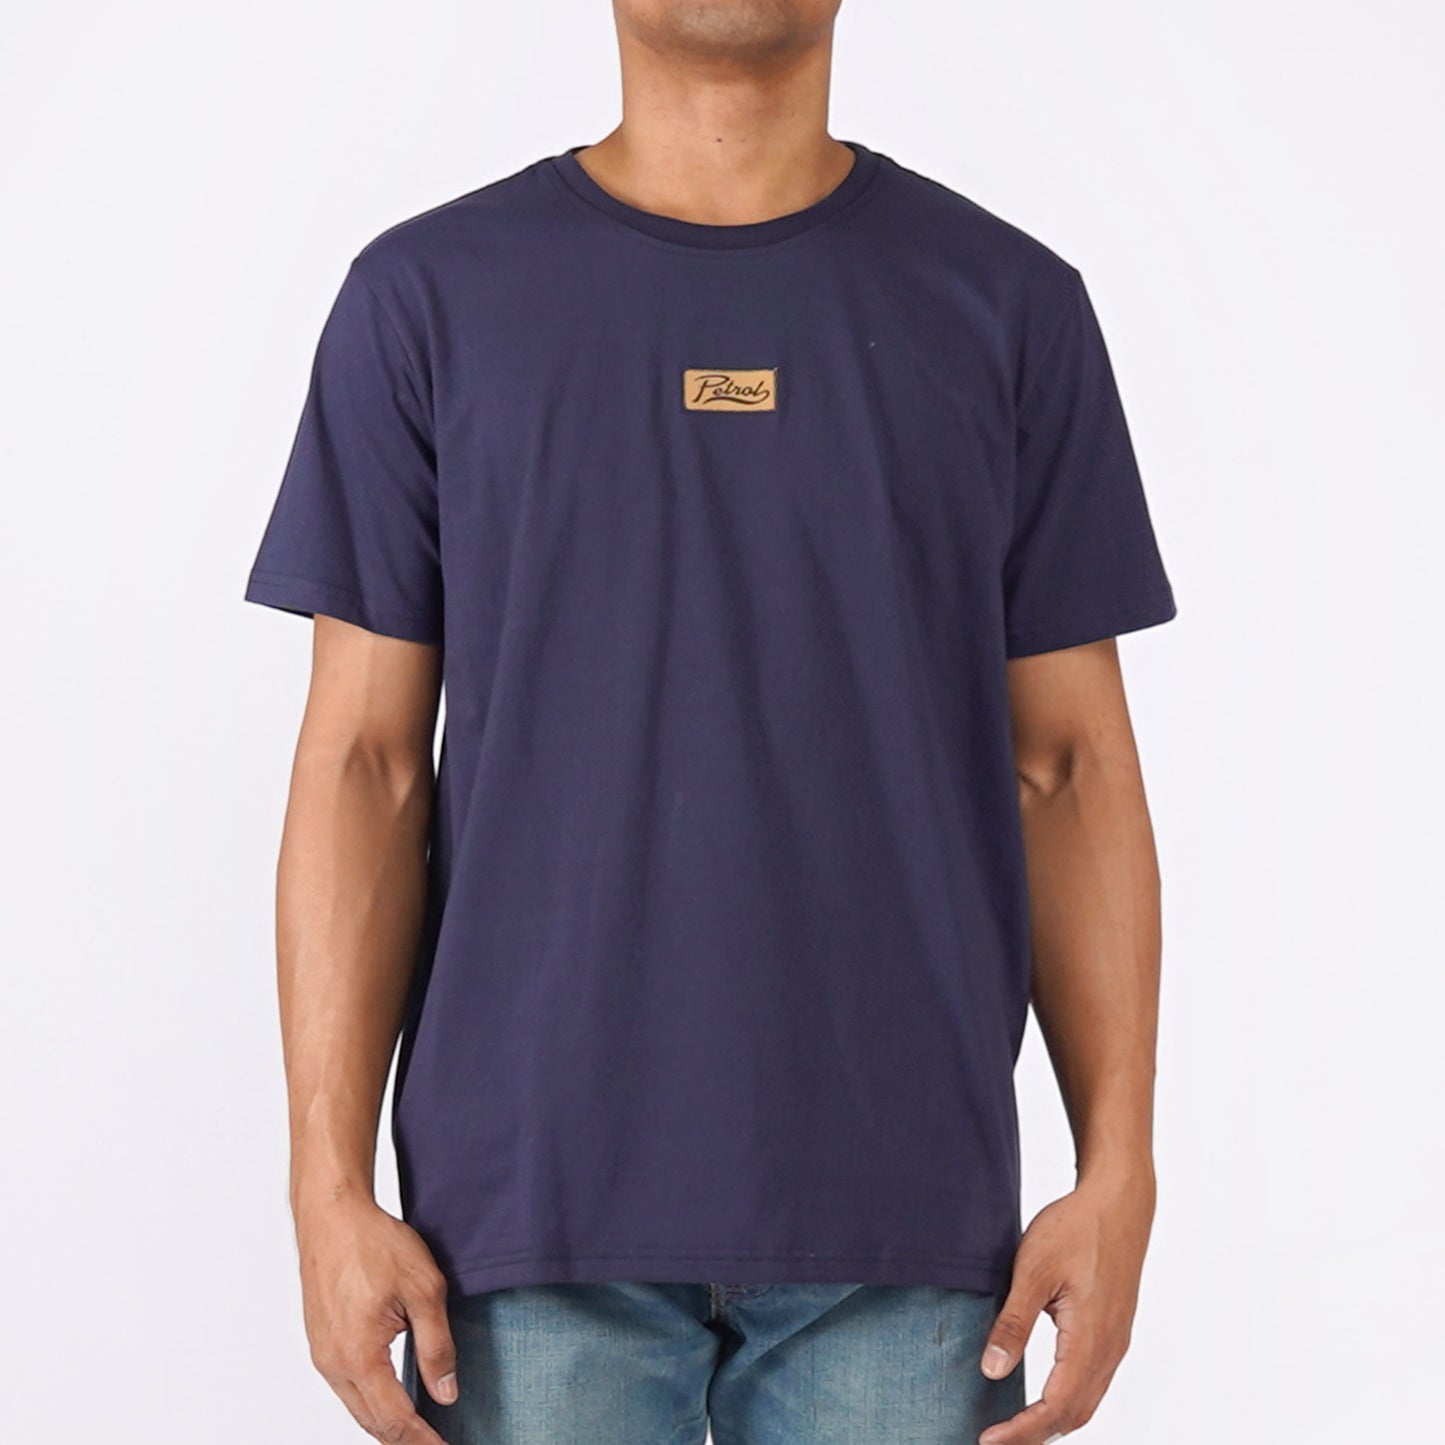 Petrol Basic Tees for Men Slim Fitting Shirt CVC Jersey Fabric Trendy fashion Casual Top Navy Blue T-shirt for Men 146931-U (Navy Blue)